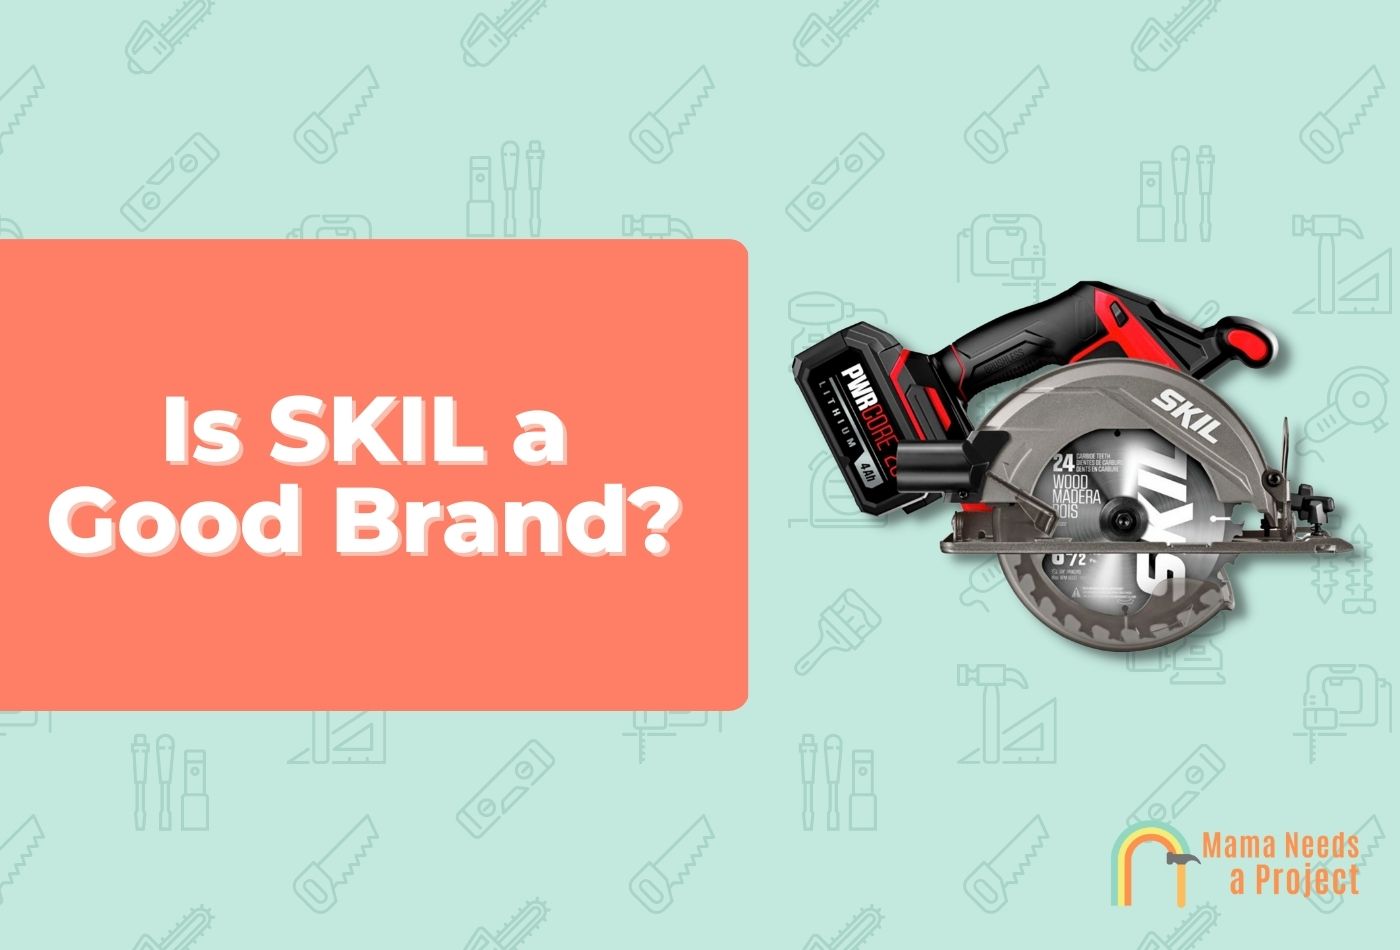 Is SKIL a Good Brand?